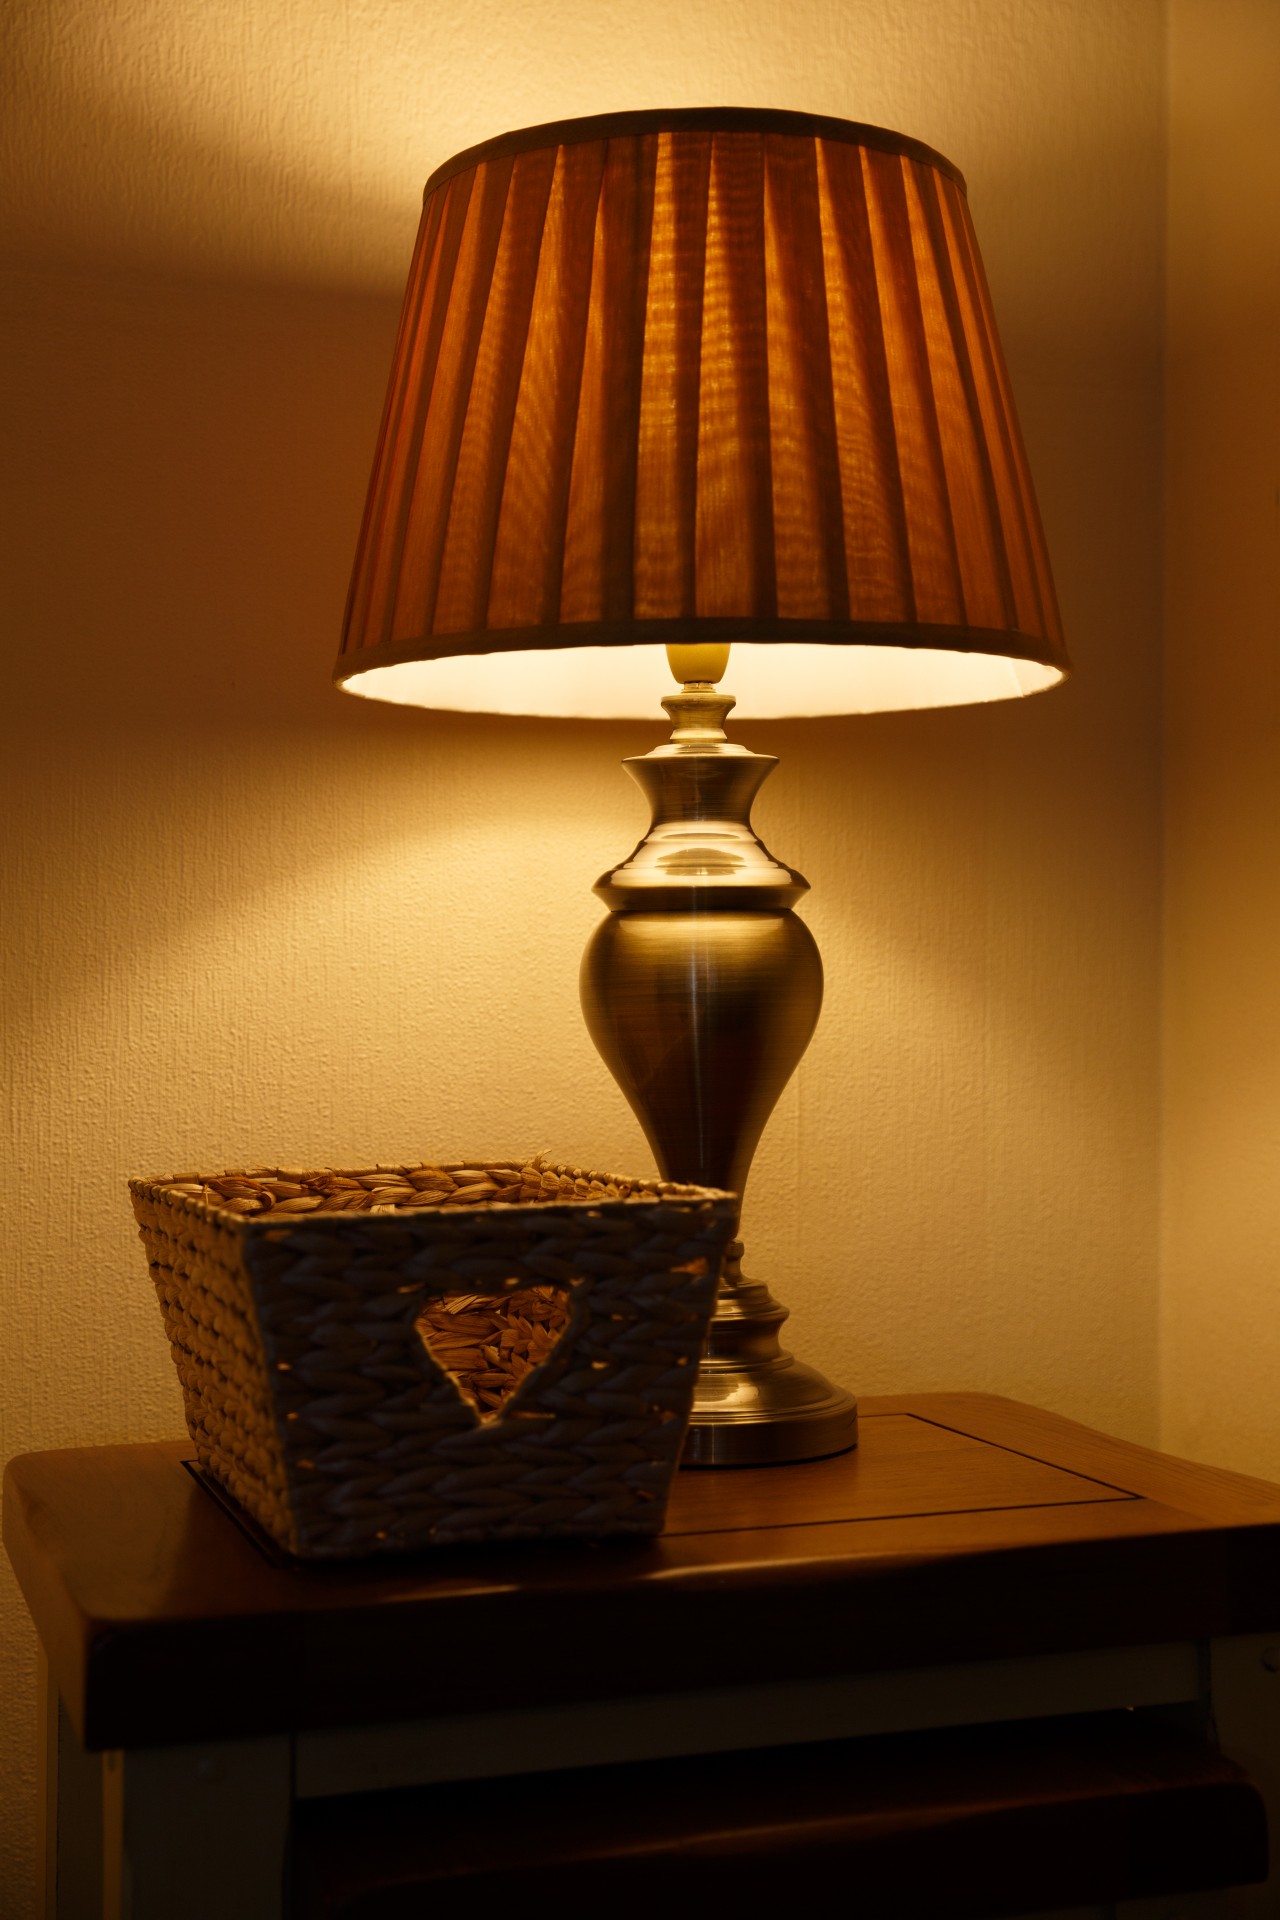 Lit Table Lamp Free Stock Photo - Public Domain Pictures